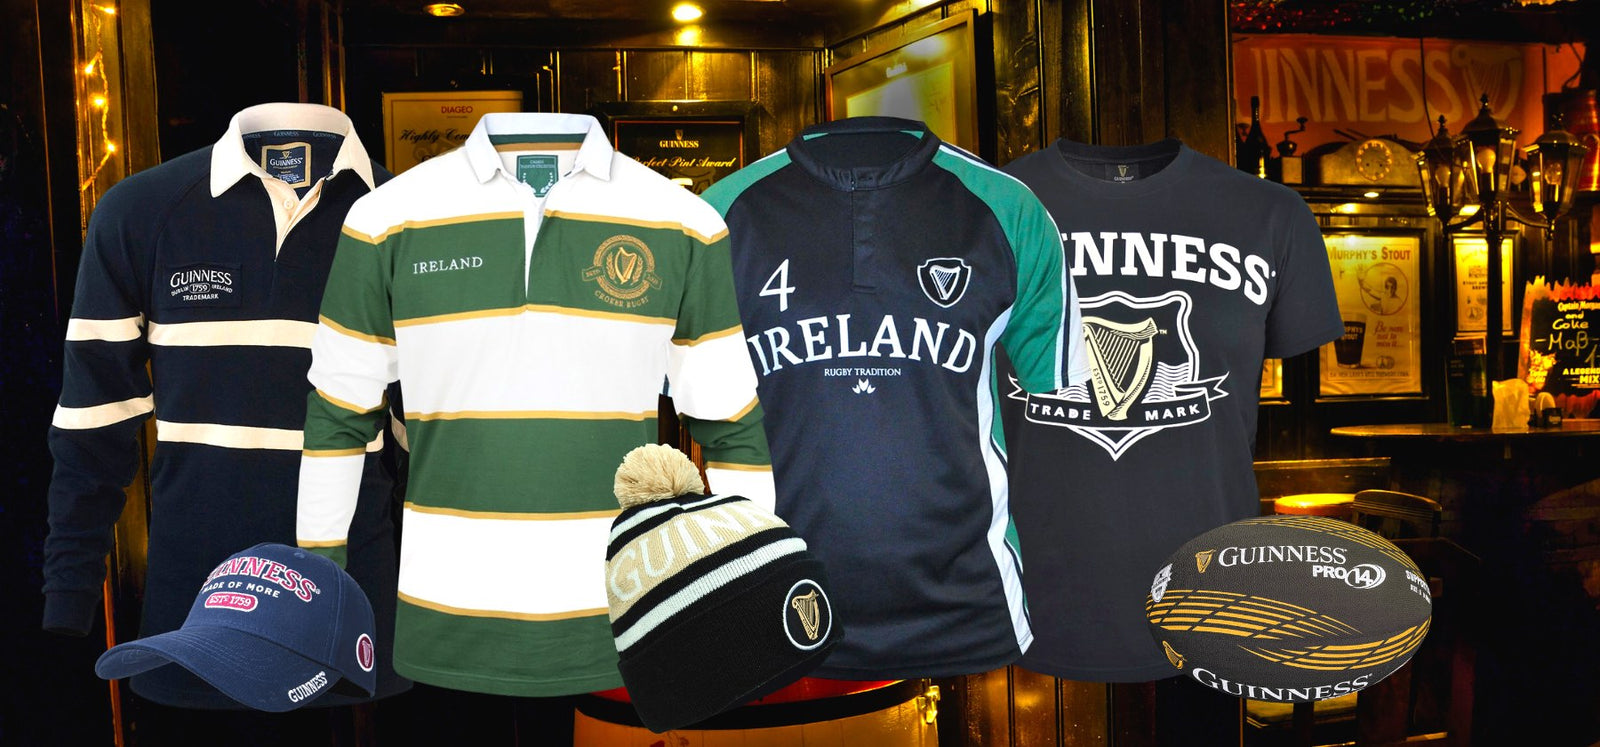 Klusjesman Sherlock Holmes Voorouder Rugby Imports - Authentic Rugby gear, Apparel & Teamwear